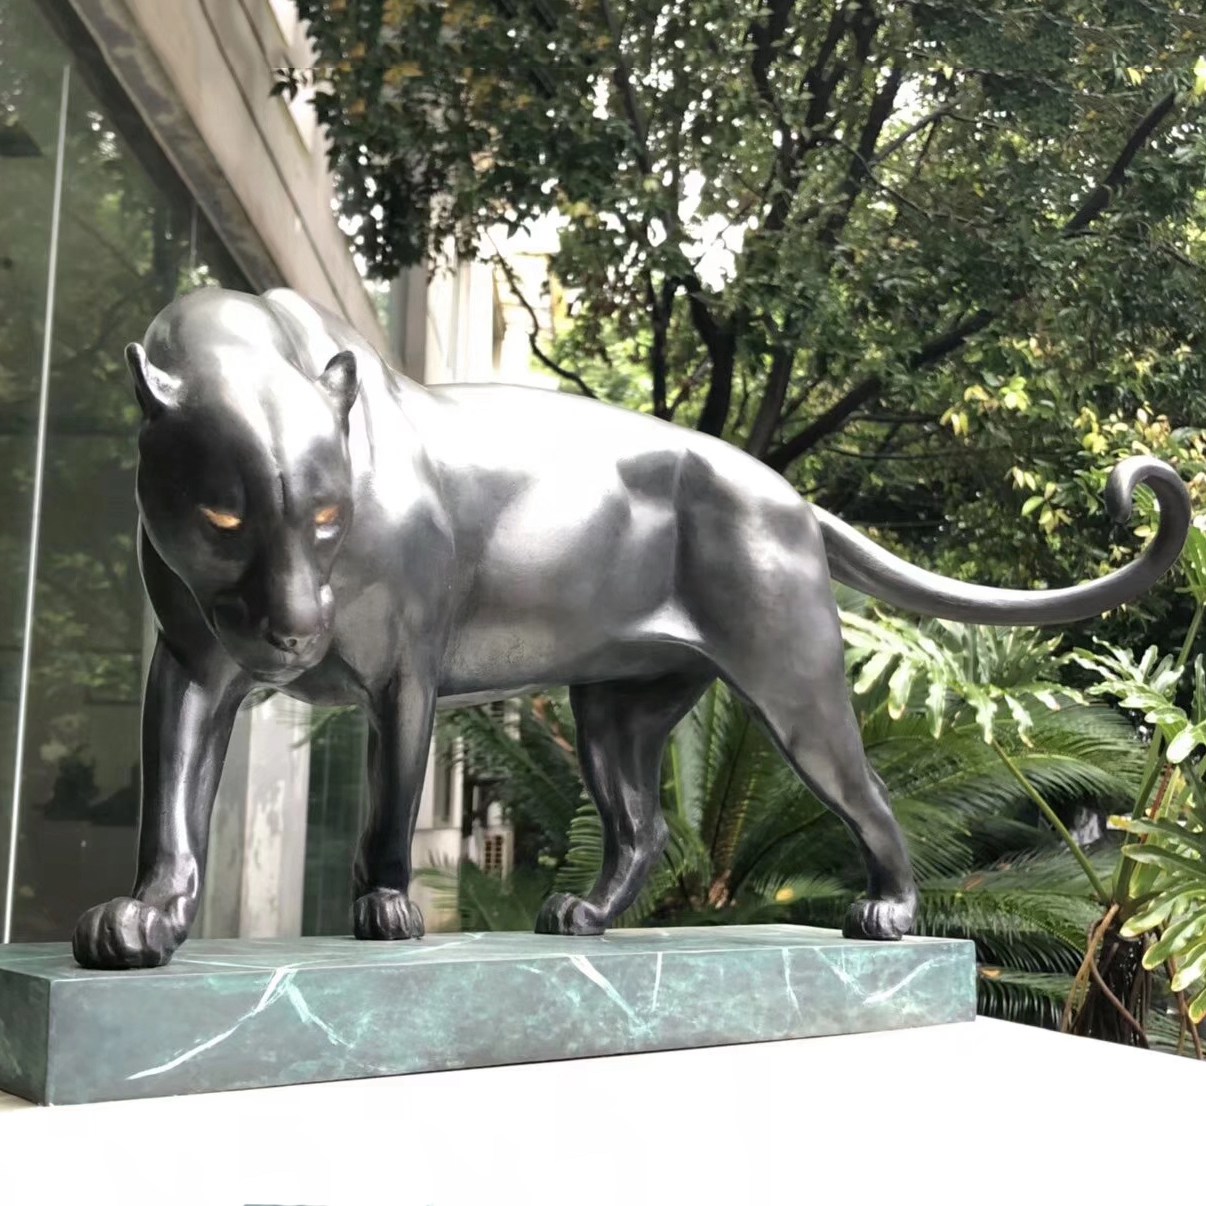 https://www.aongking.com/wp-content/uploads/2020/09/Leopard-statue-animal.jpg